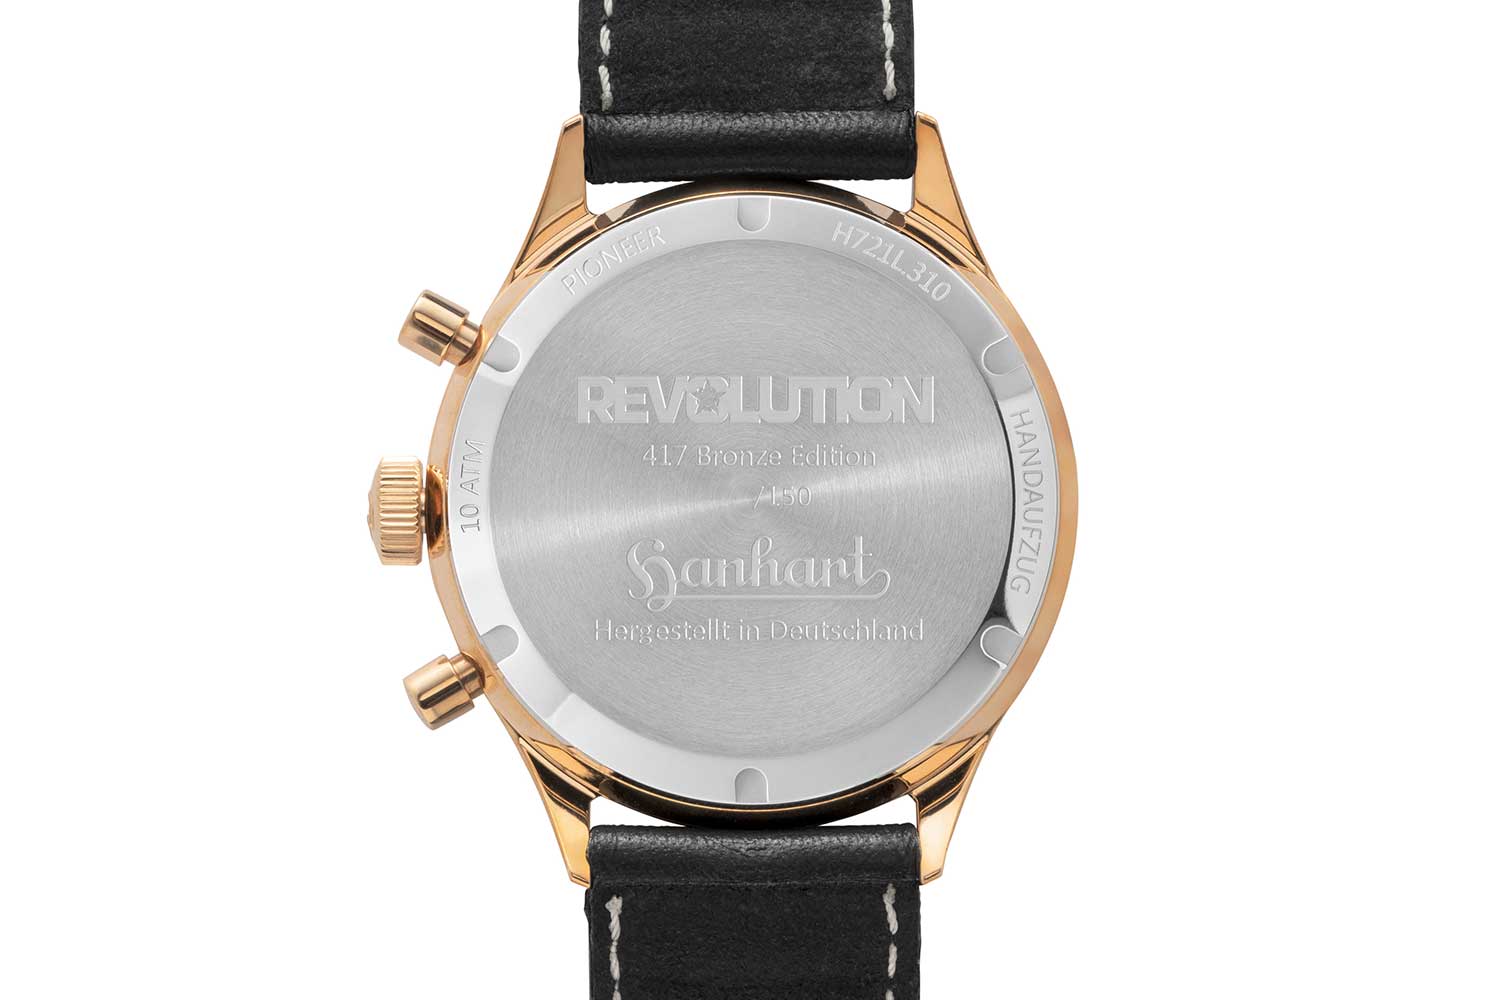 Caseback of the Hanhart x The Rake & Revolution Limited Edition Bronze 417 Chronograph (©Revolution)